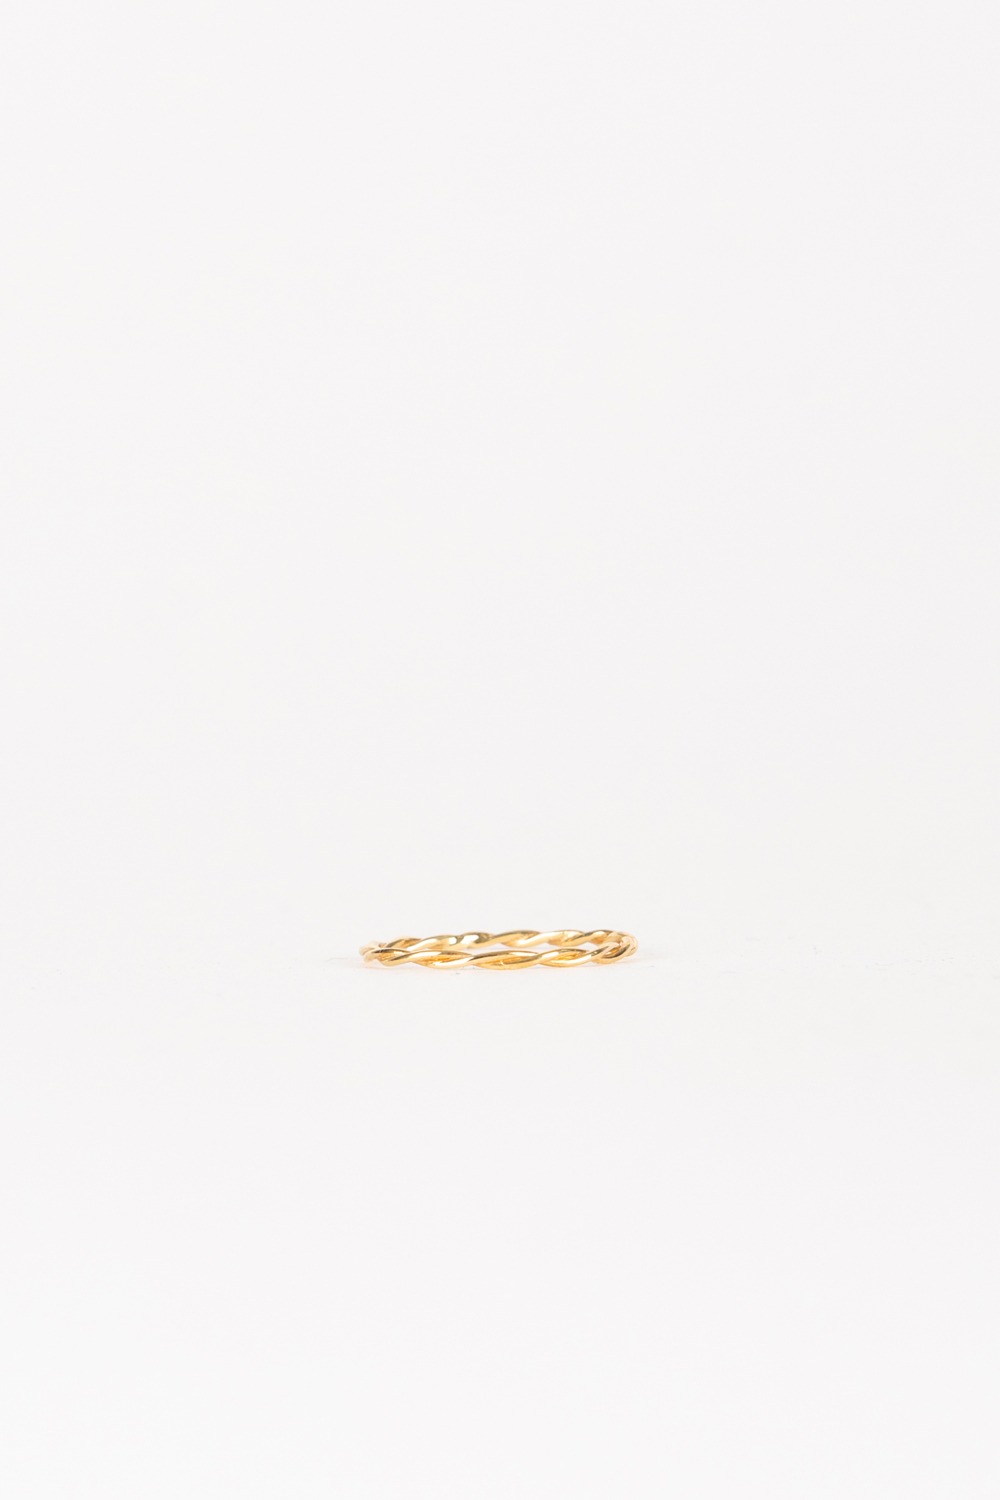 BRAID GOLD RING(R050-OA)